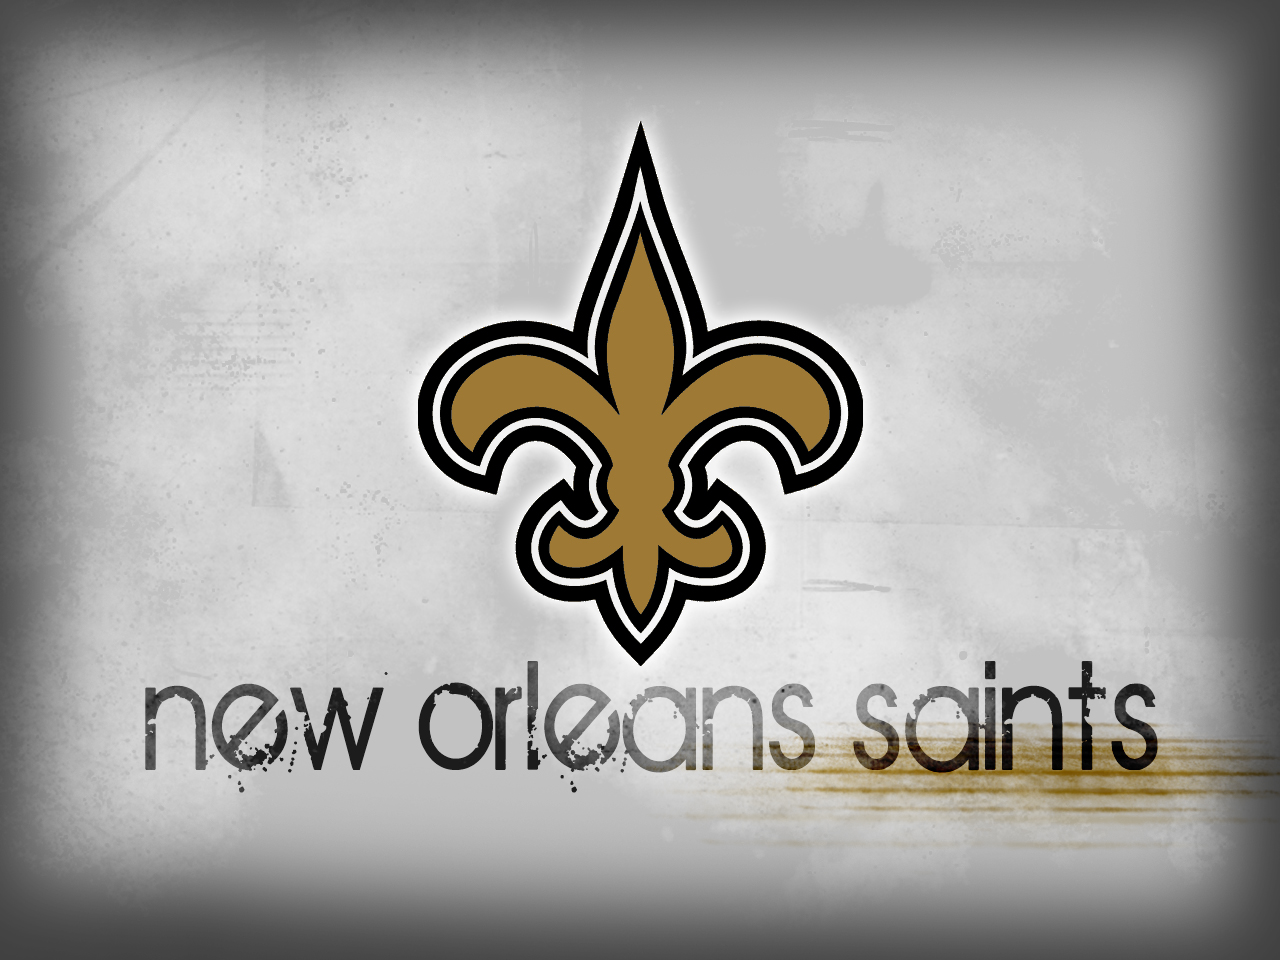 New Orleans Saints Quarterback Drew Brees Image Football